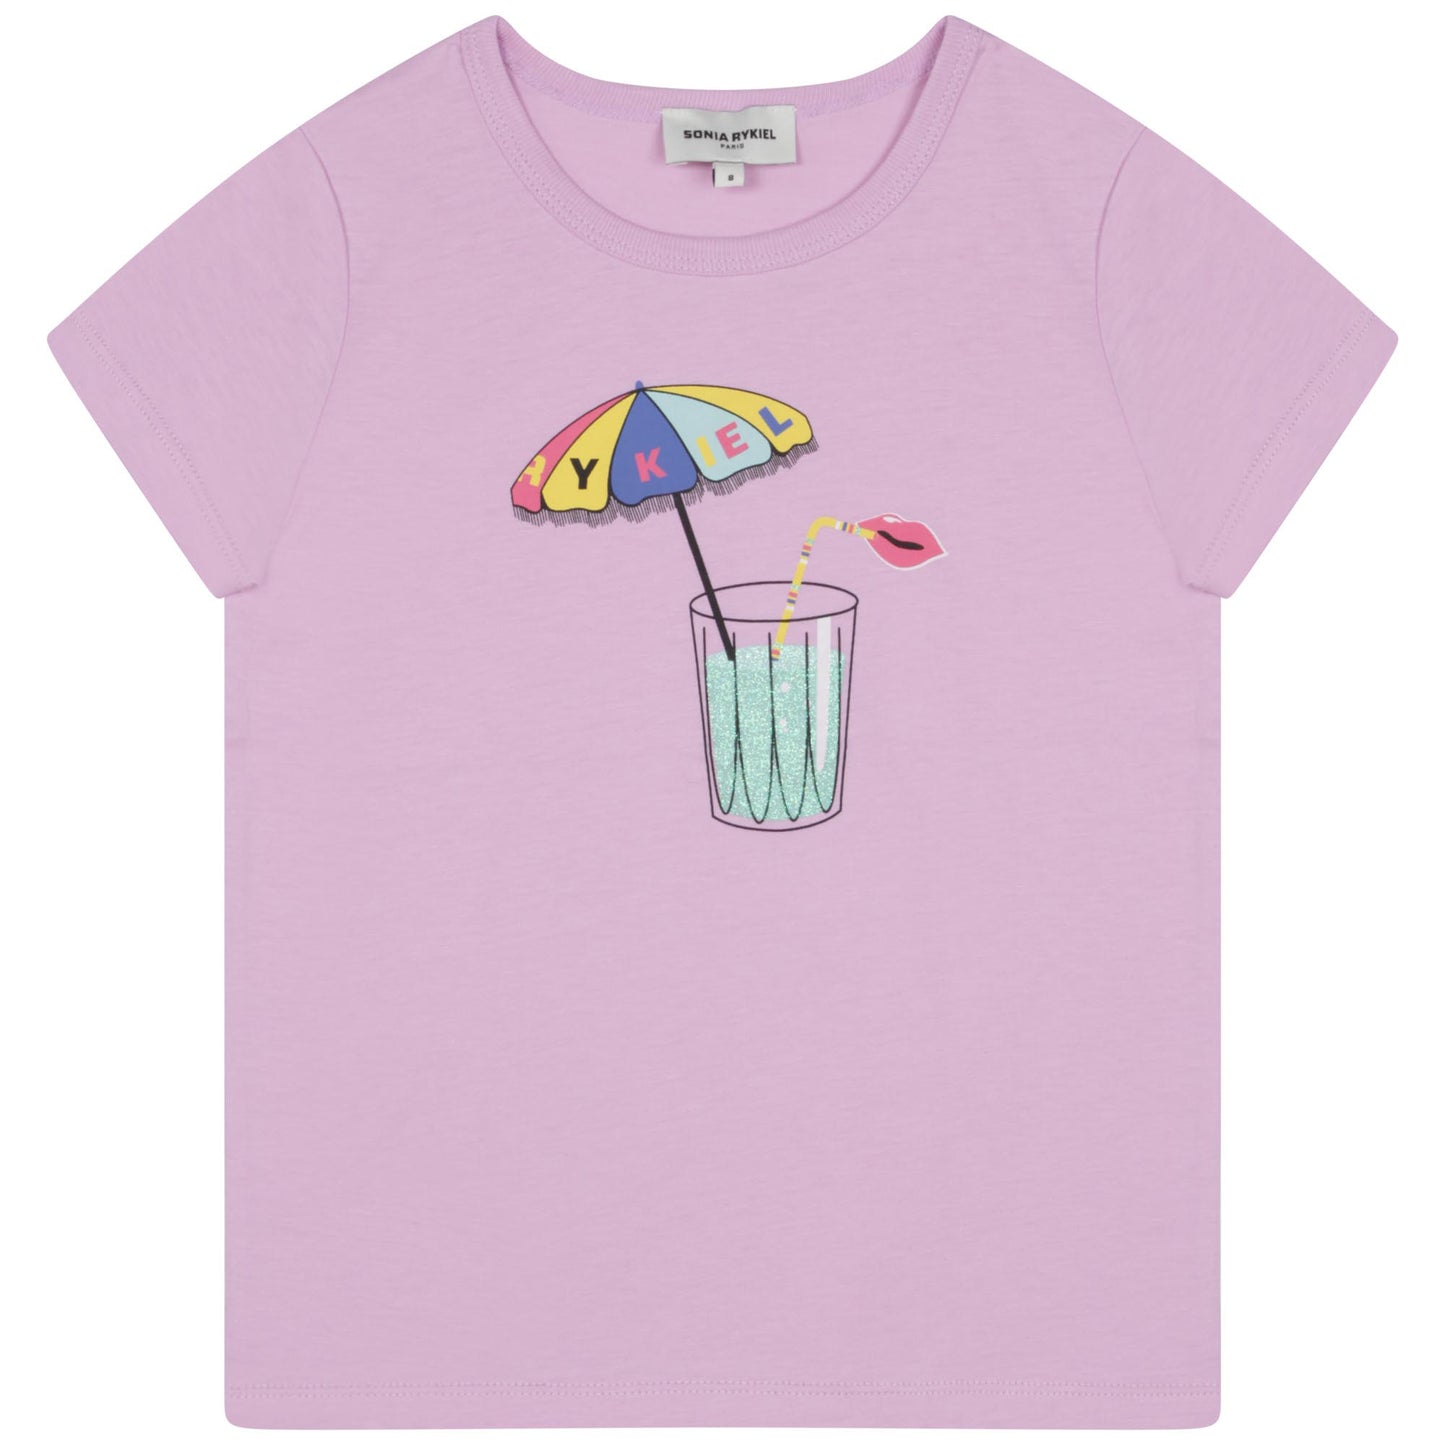 Sonia Rykiel Short Sleeve T-Shirt w/ Umbrella & Drink Graphic